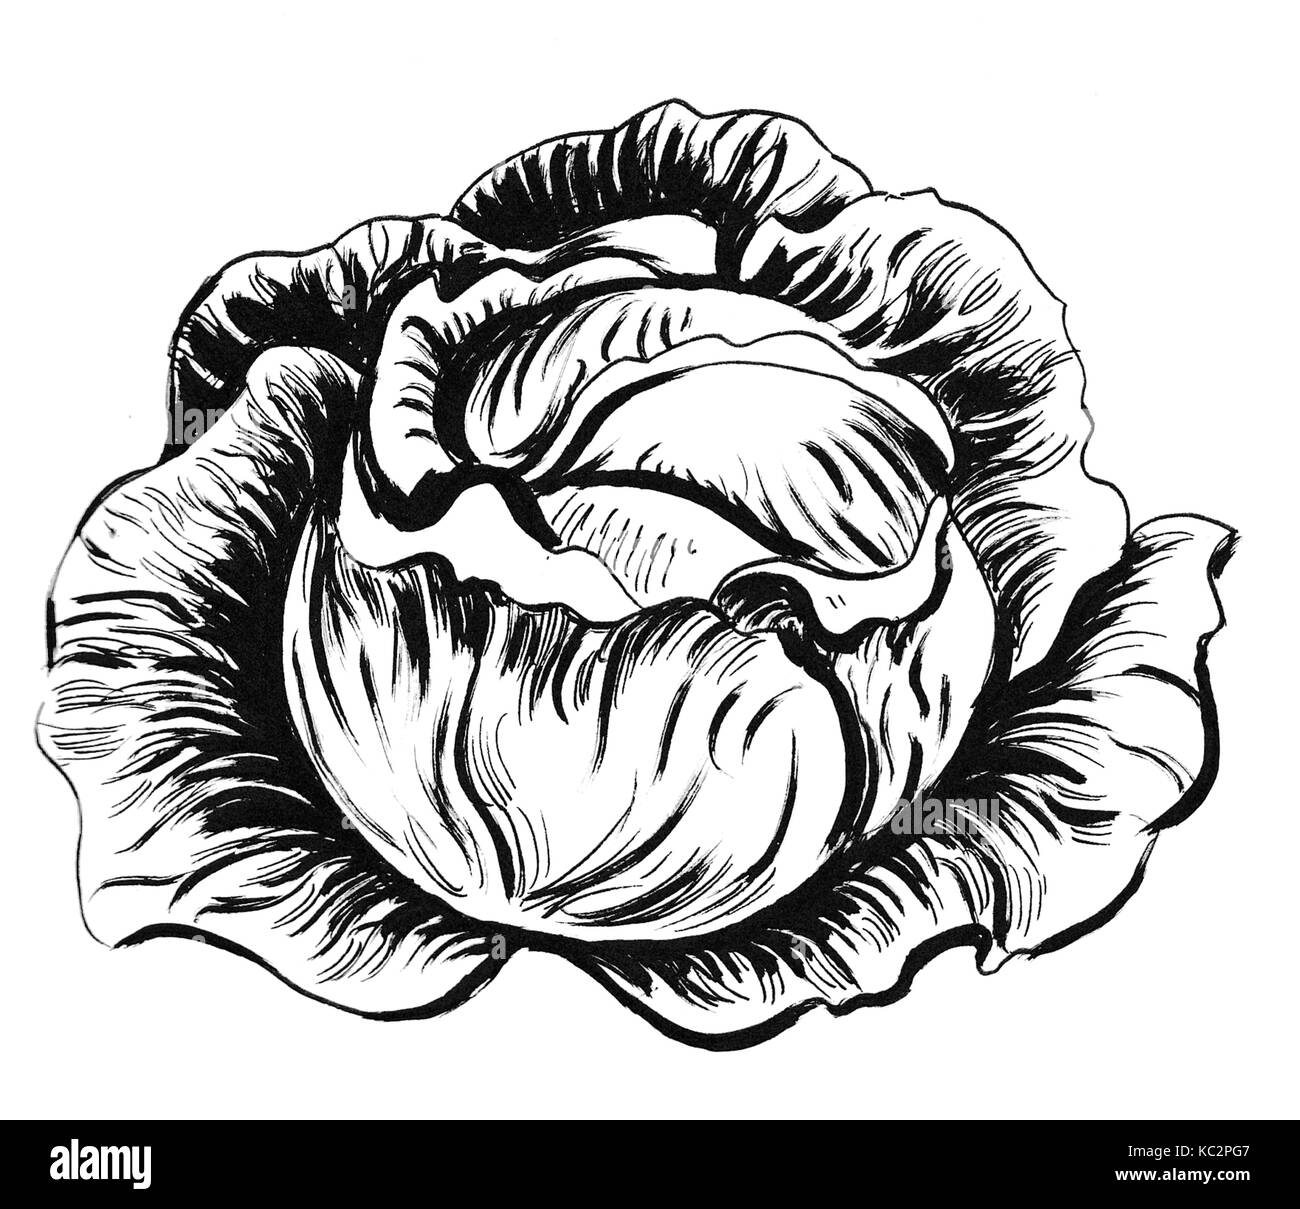 Sketch illustration of Cabbage Stock Vector by Kopirin 68543259